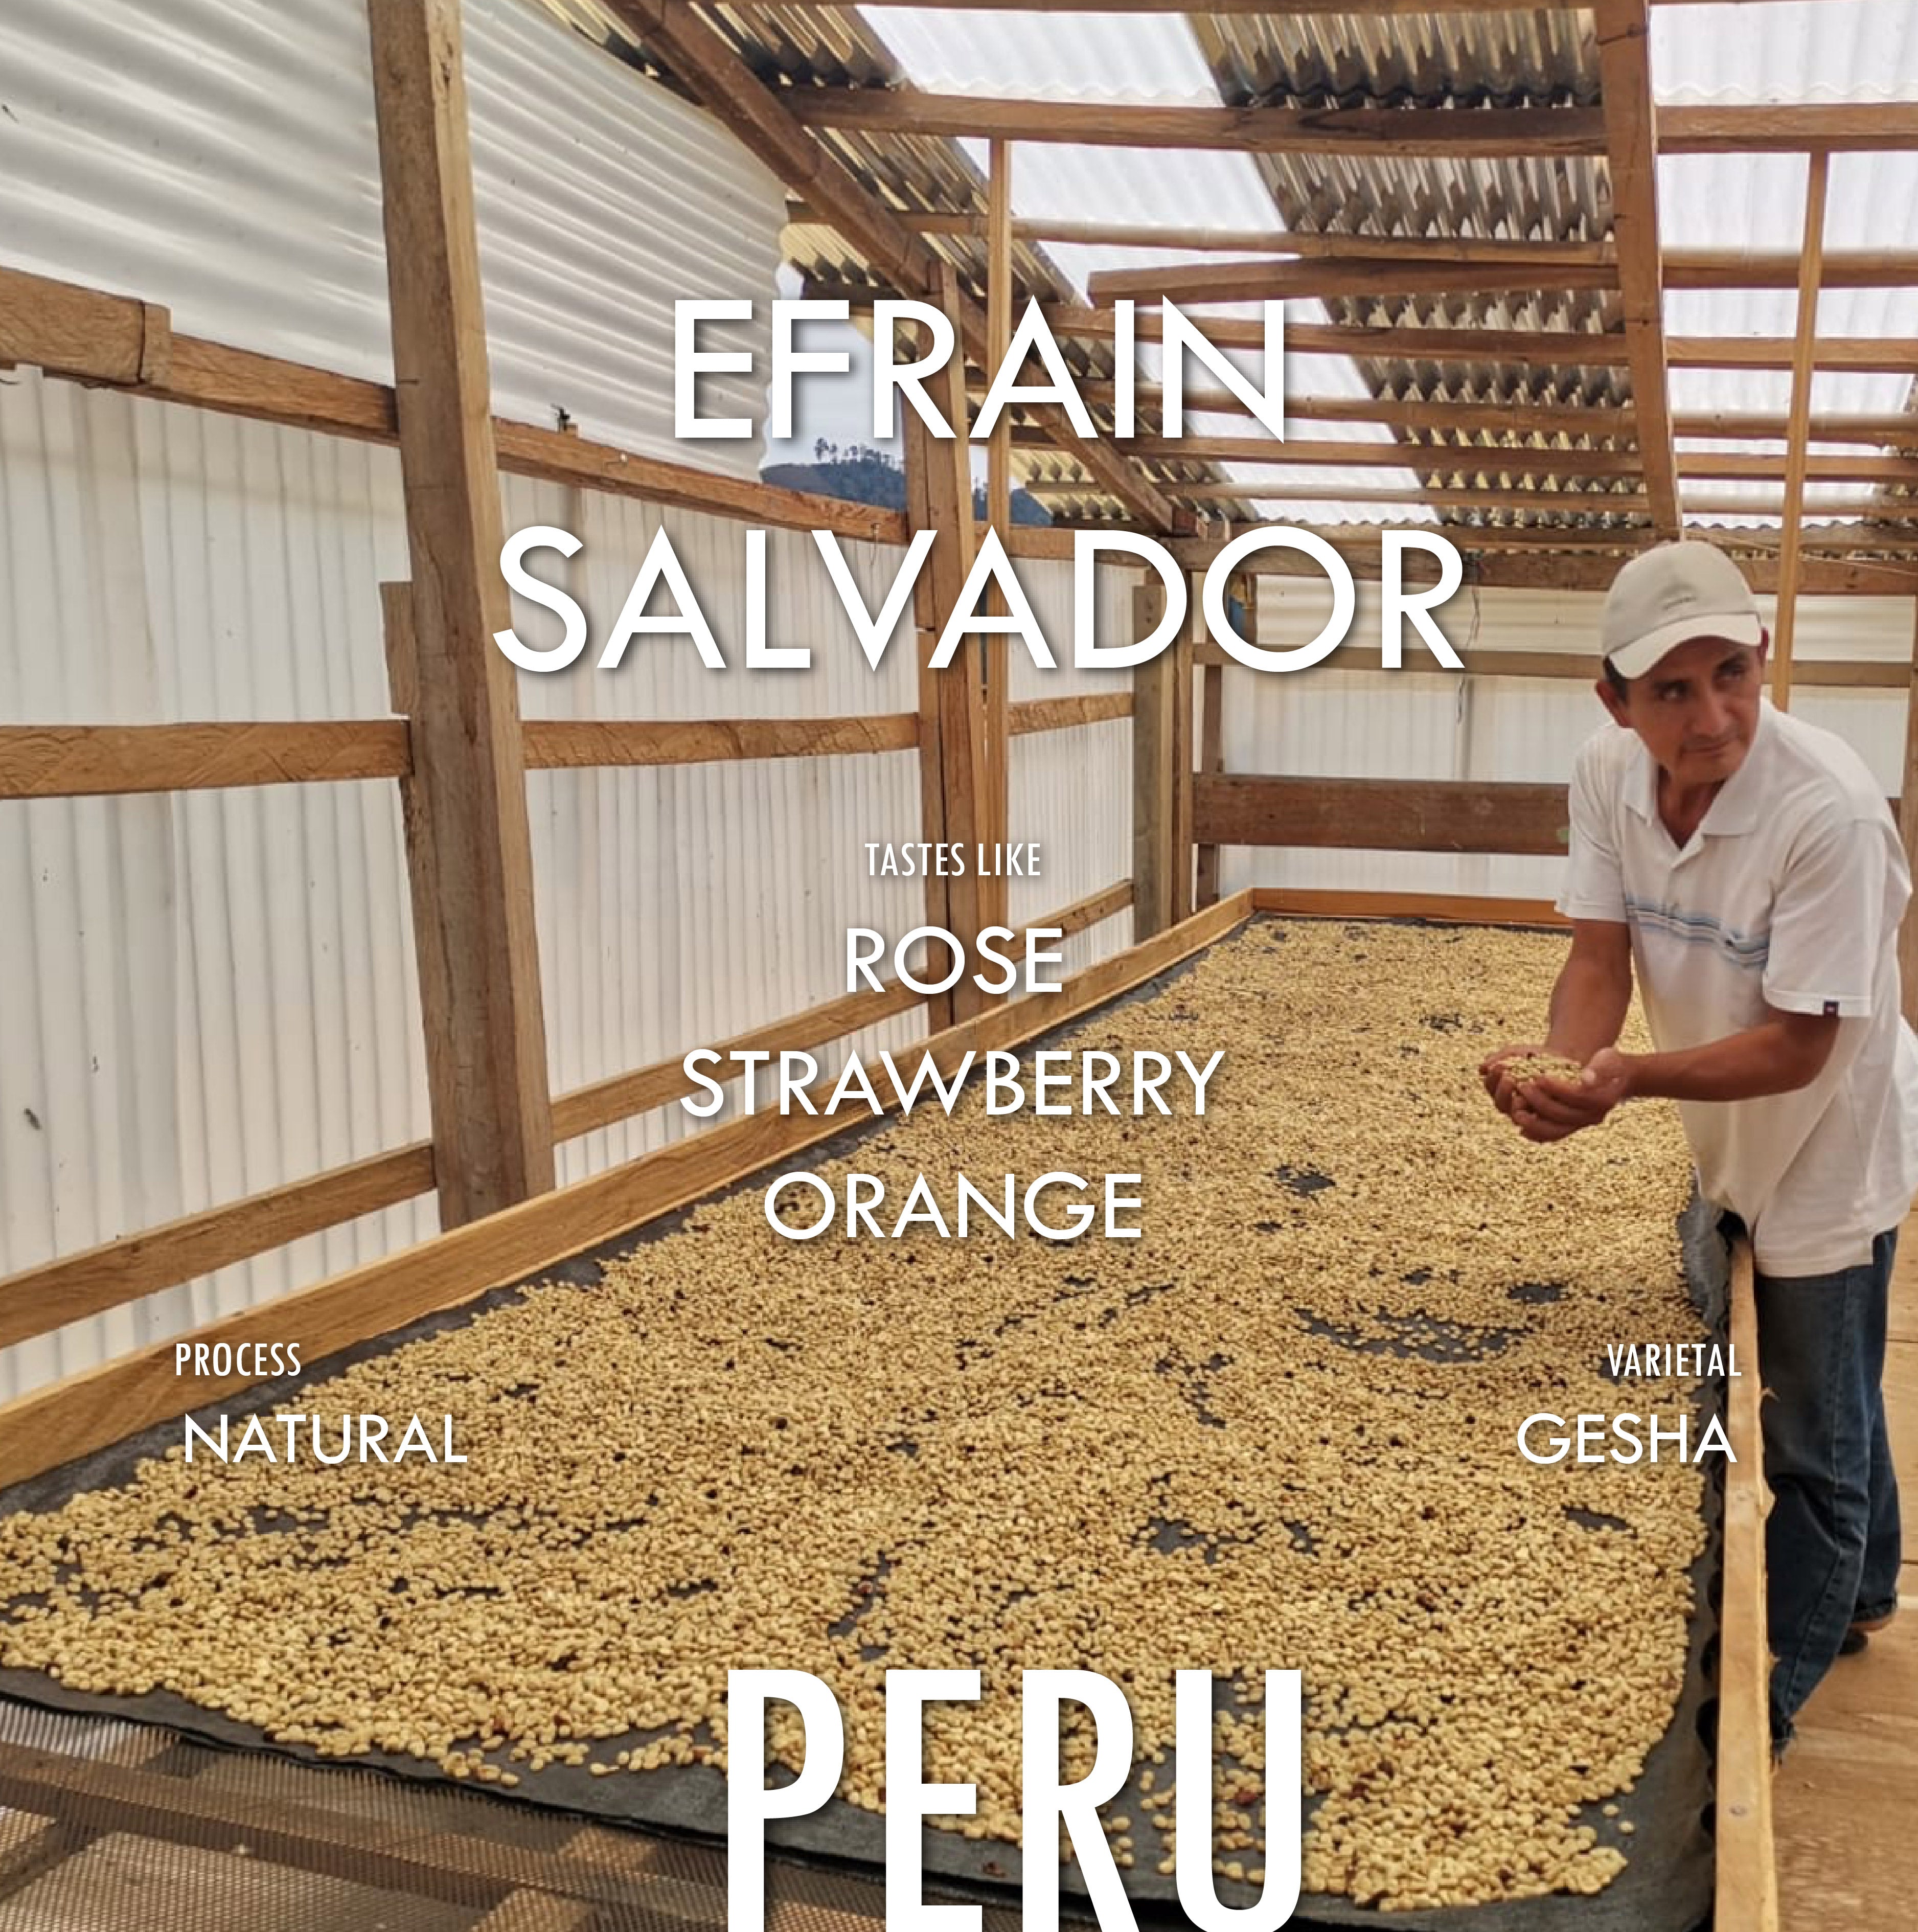 Peru Efrain Salvador Gesha Natural - Filter Roast